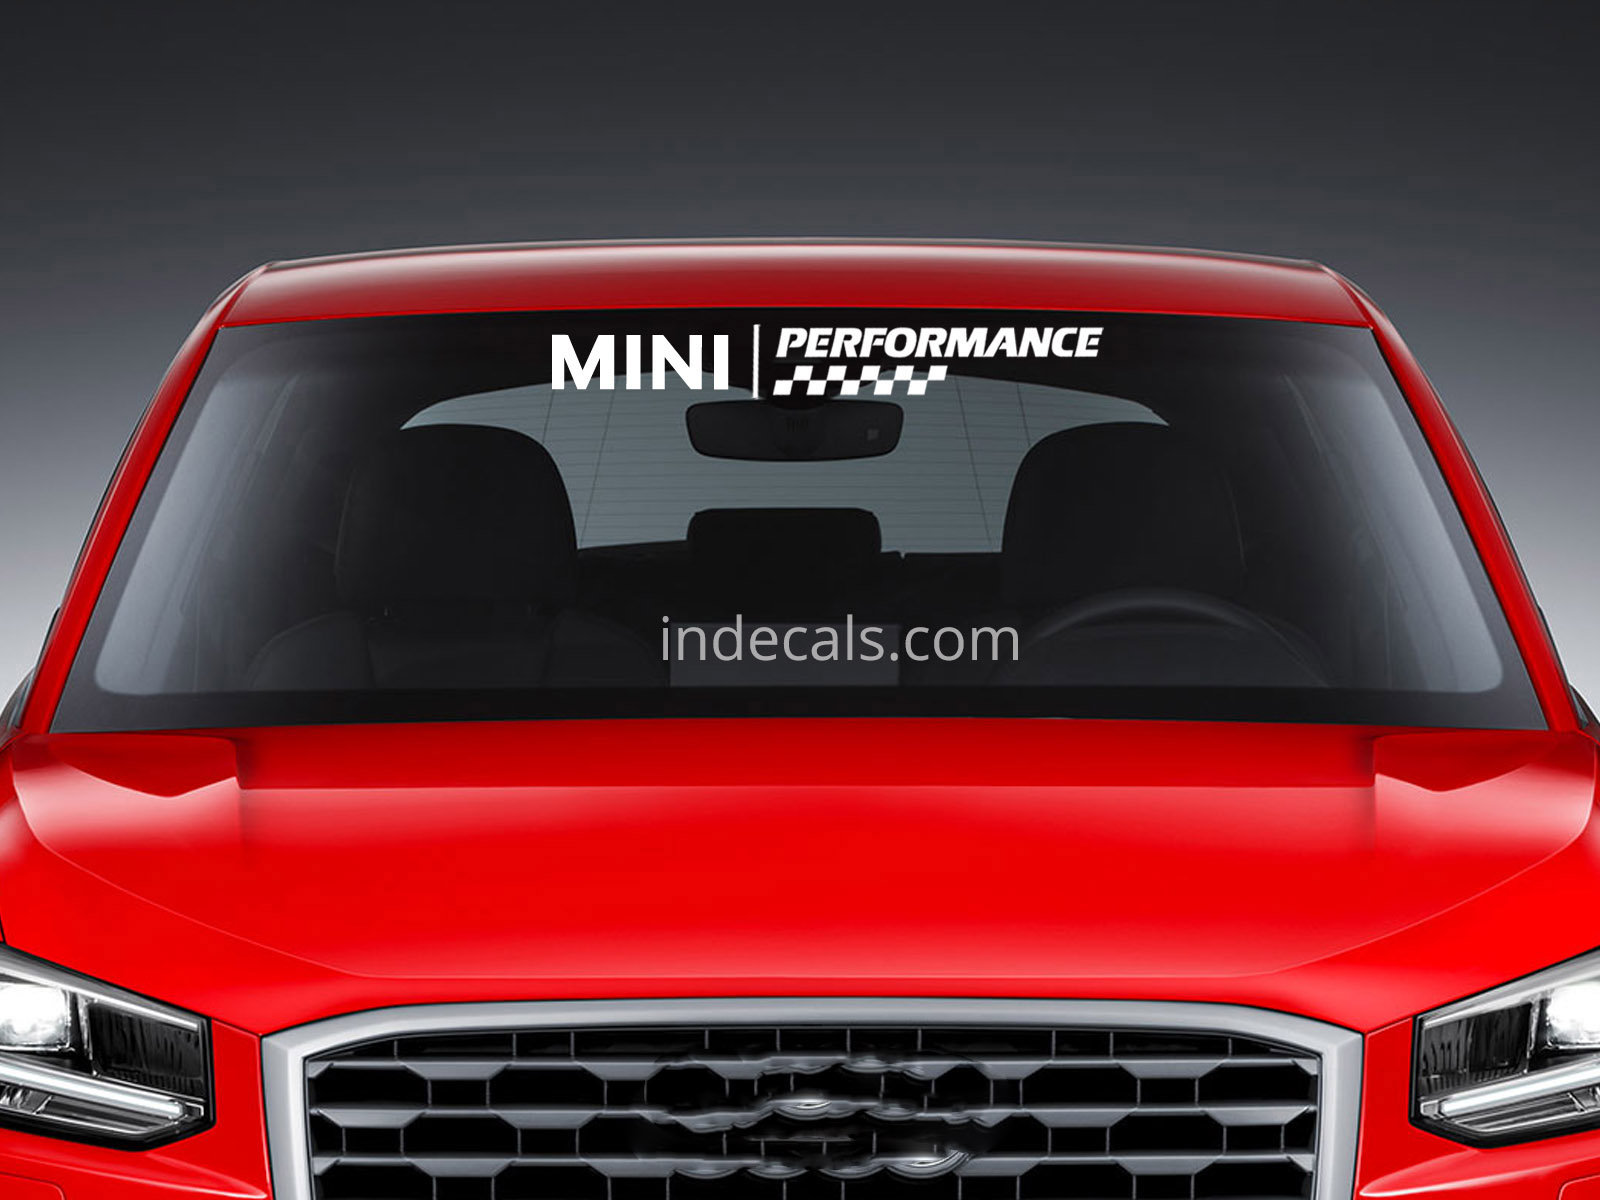 1 x Mini Performance Sticker for Windshield or Back Window - White